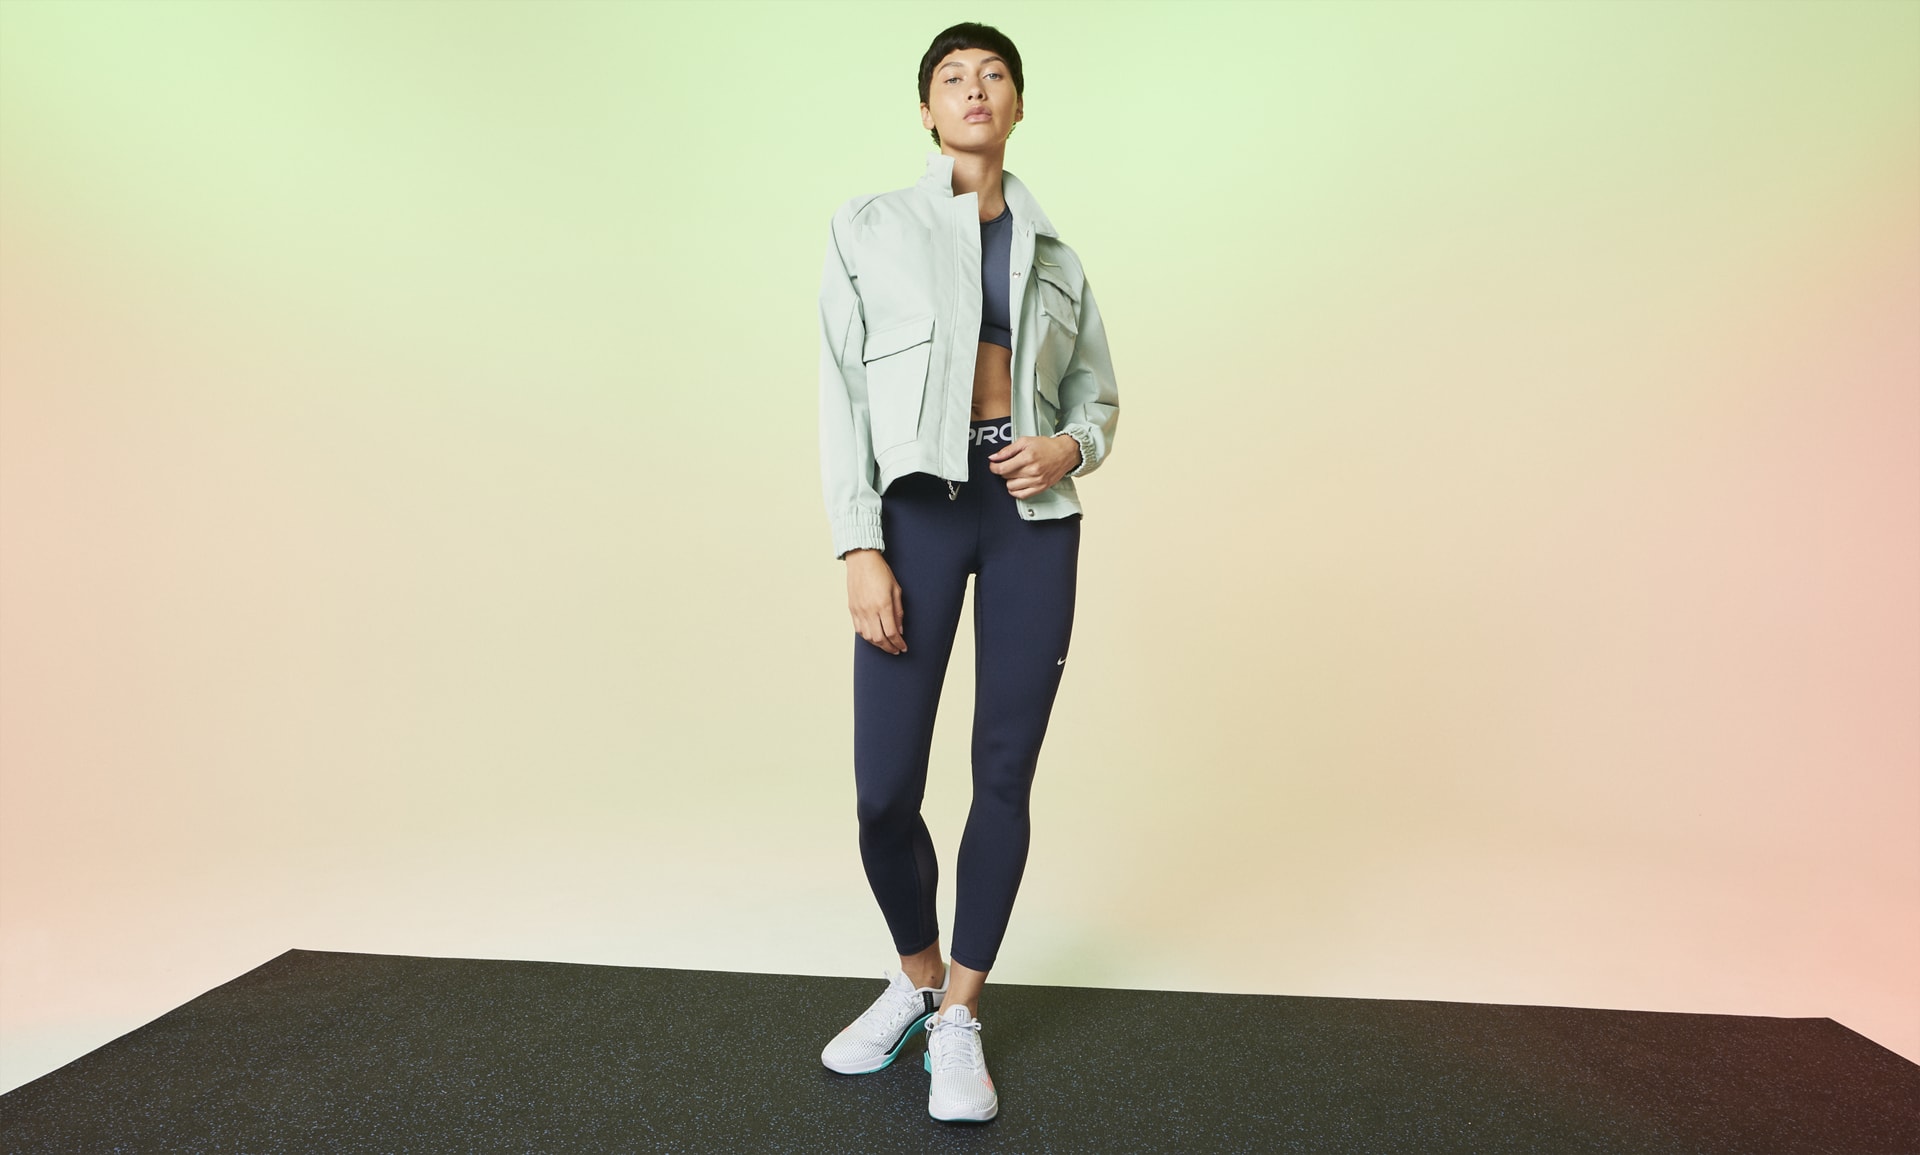 Nike Pro Women's Mid-Rise Mesh-Panelled Leggings. Nike PT